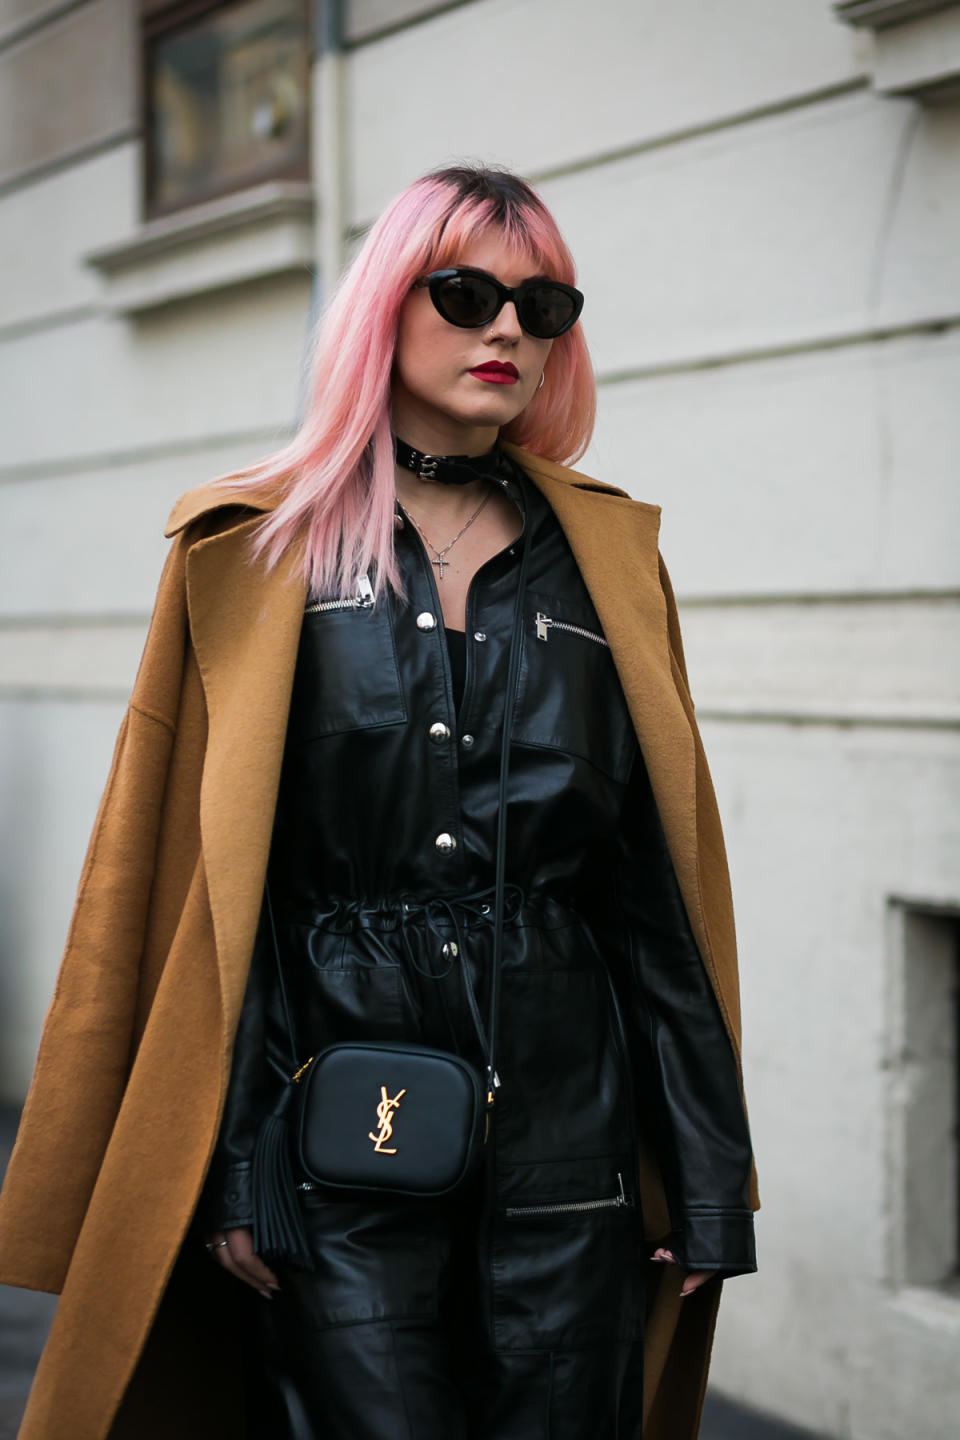 Black roots, pink hair, don’t care — after Etro at Milan Fashion Week.